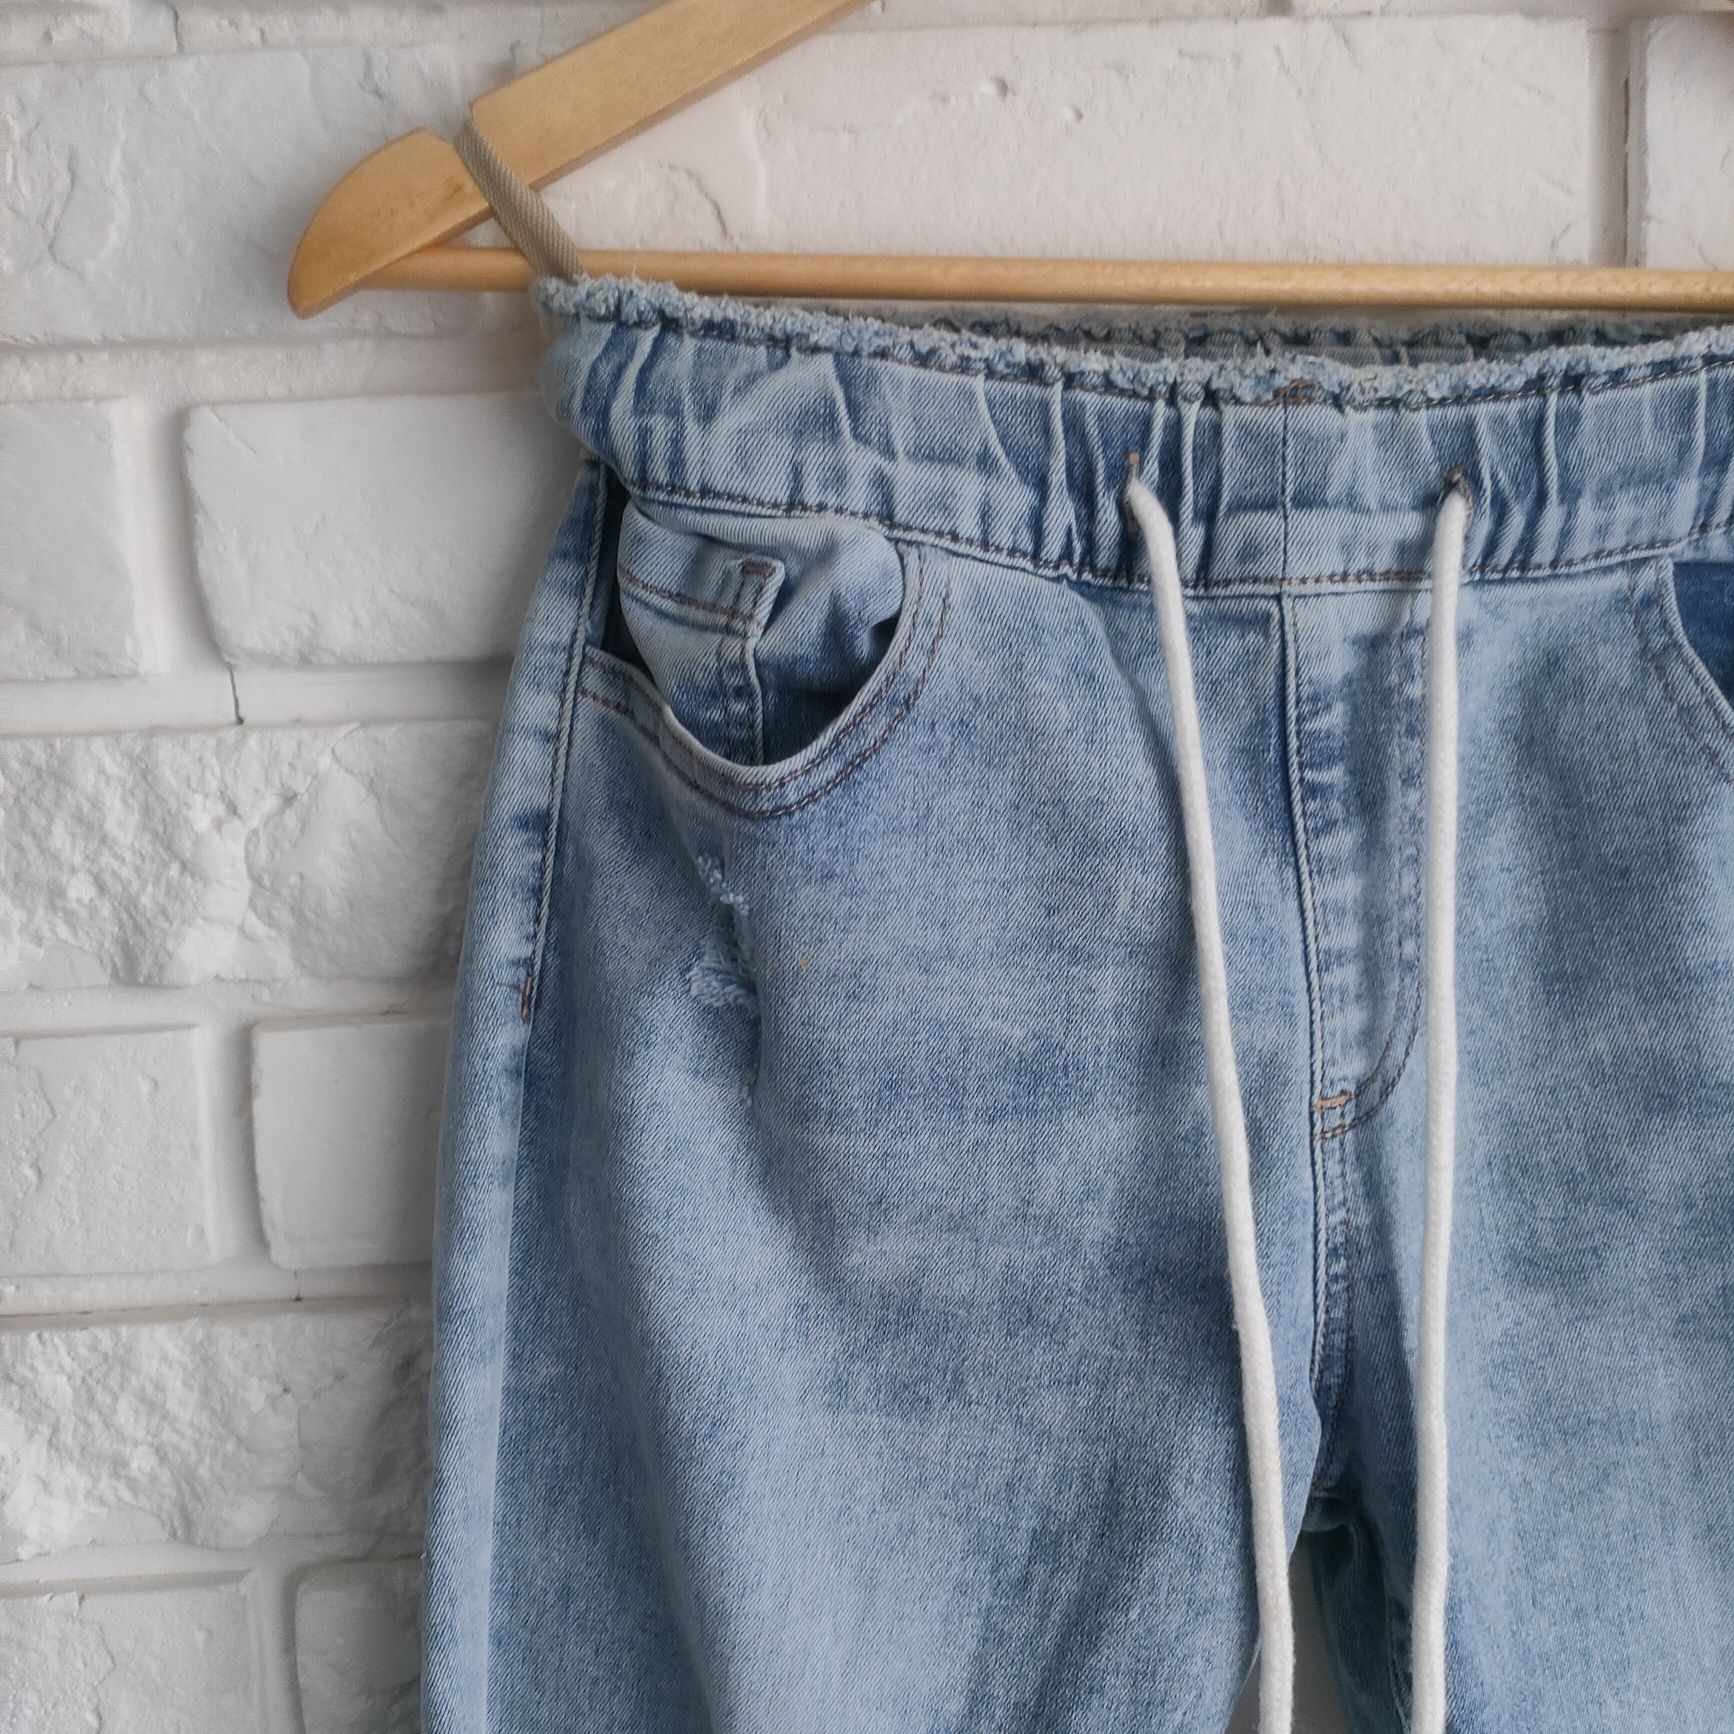 Spodnie jeans damskie